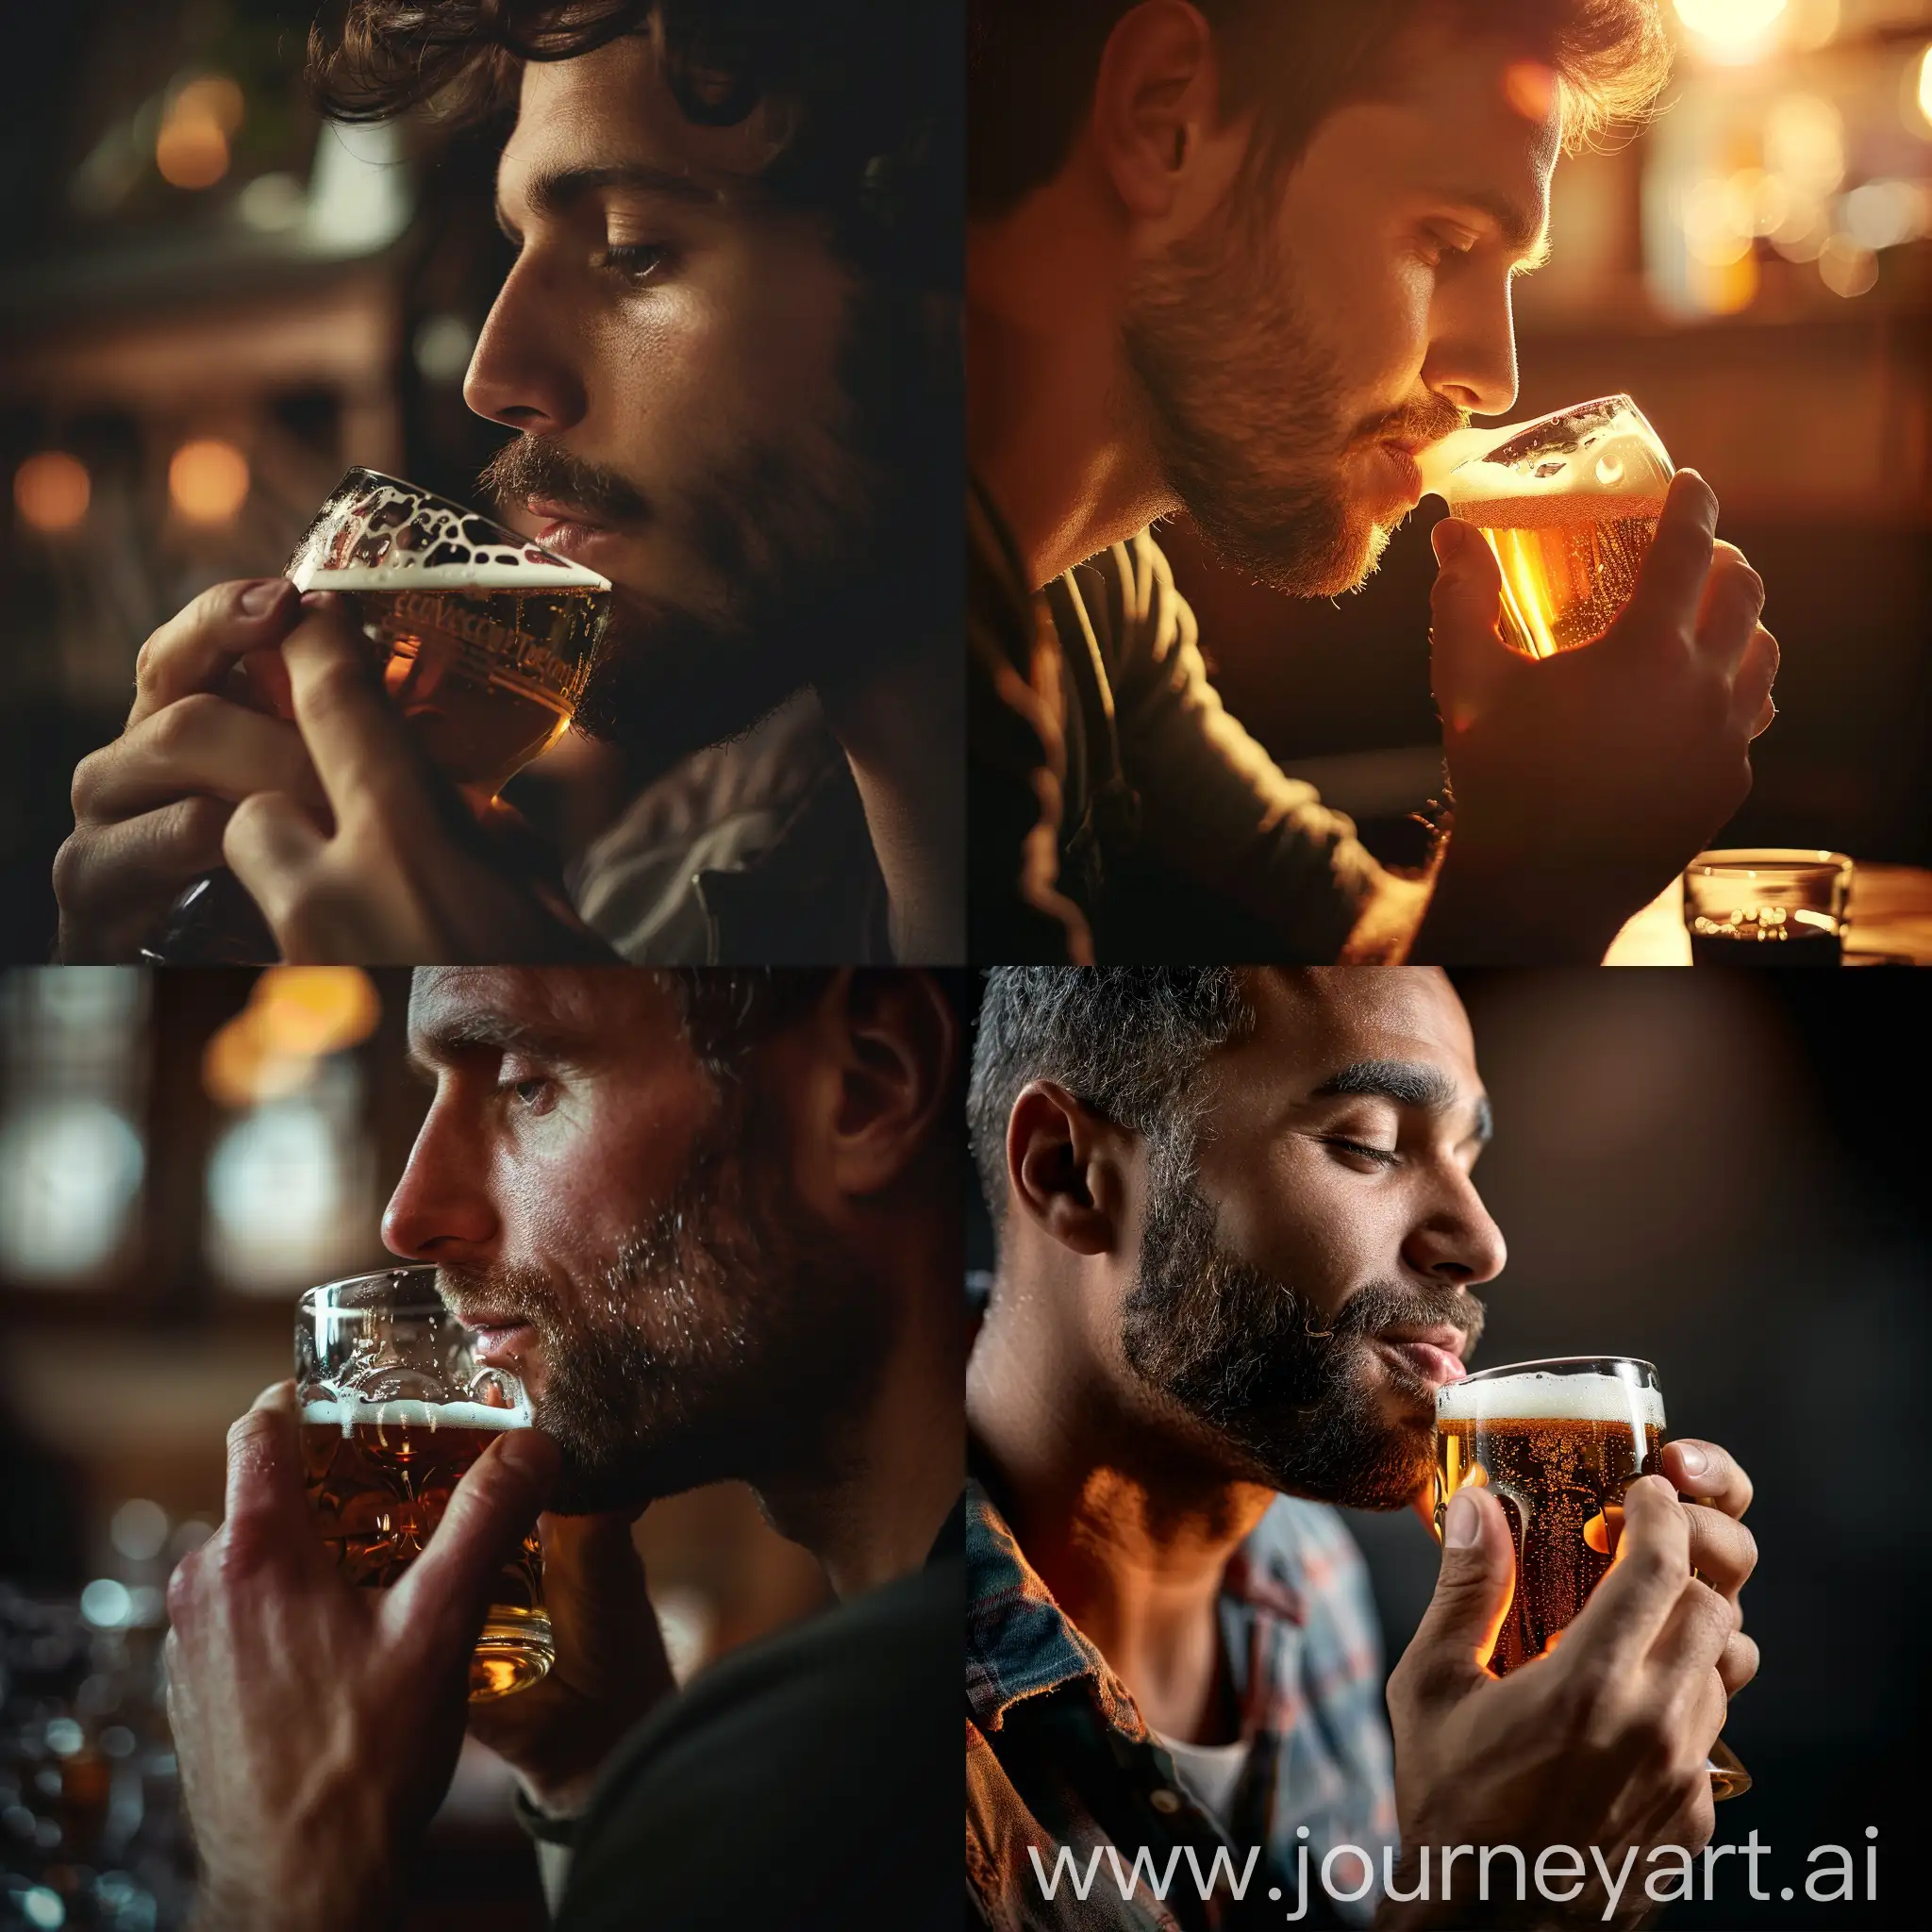 Man-Enjoying-Beer-Tasting-Contemporary-Digital-Photography-with-Warm-Tones